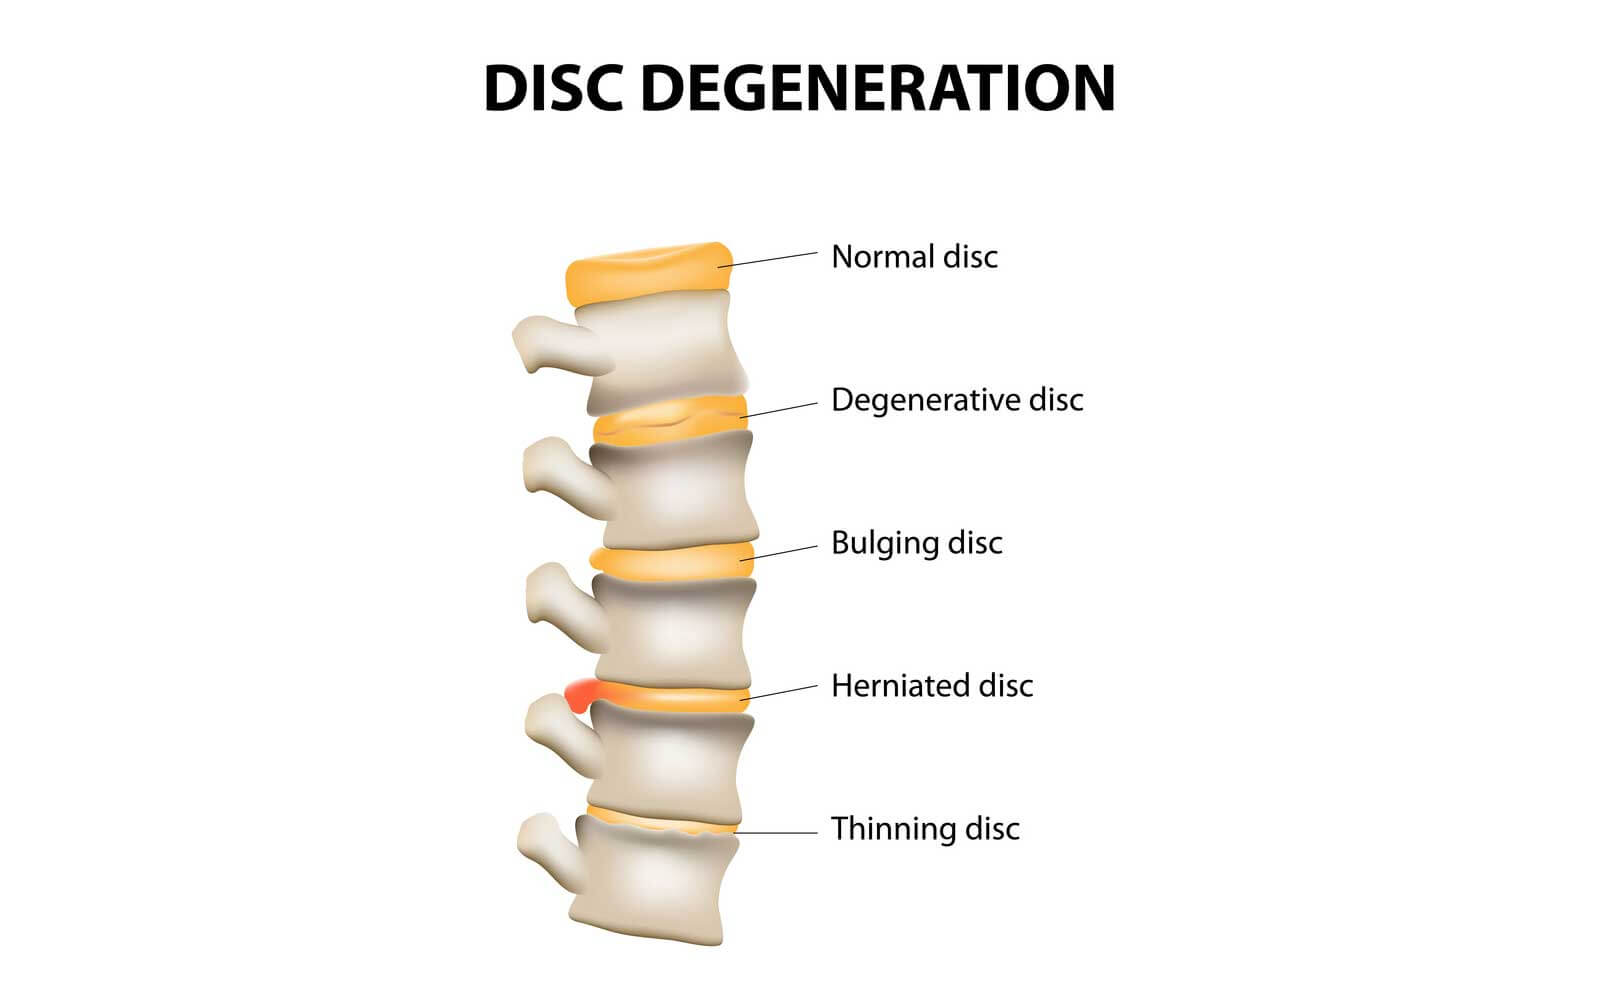 Degenerative Disc Disorder